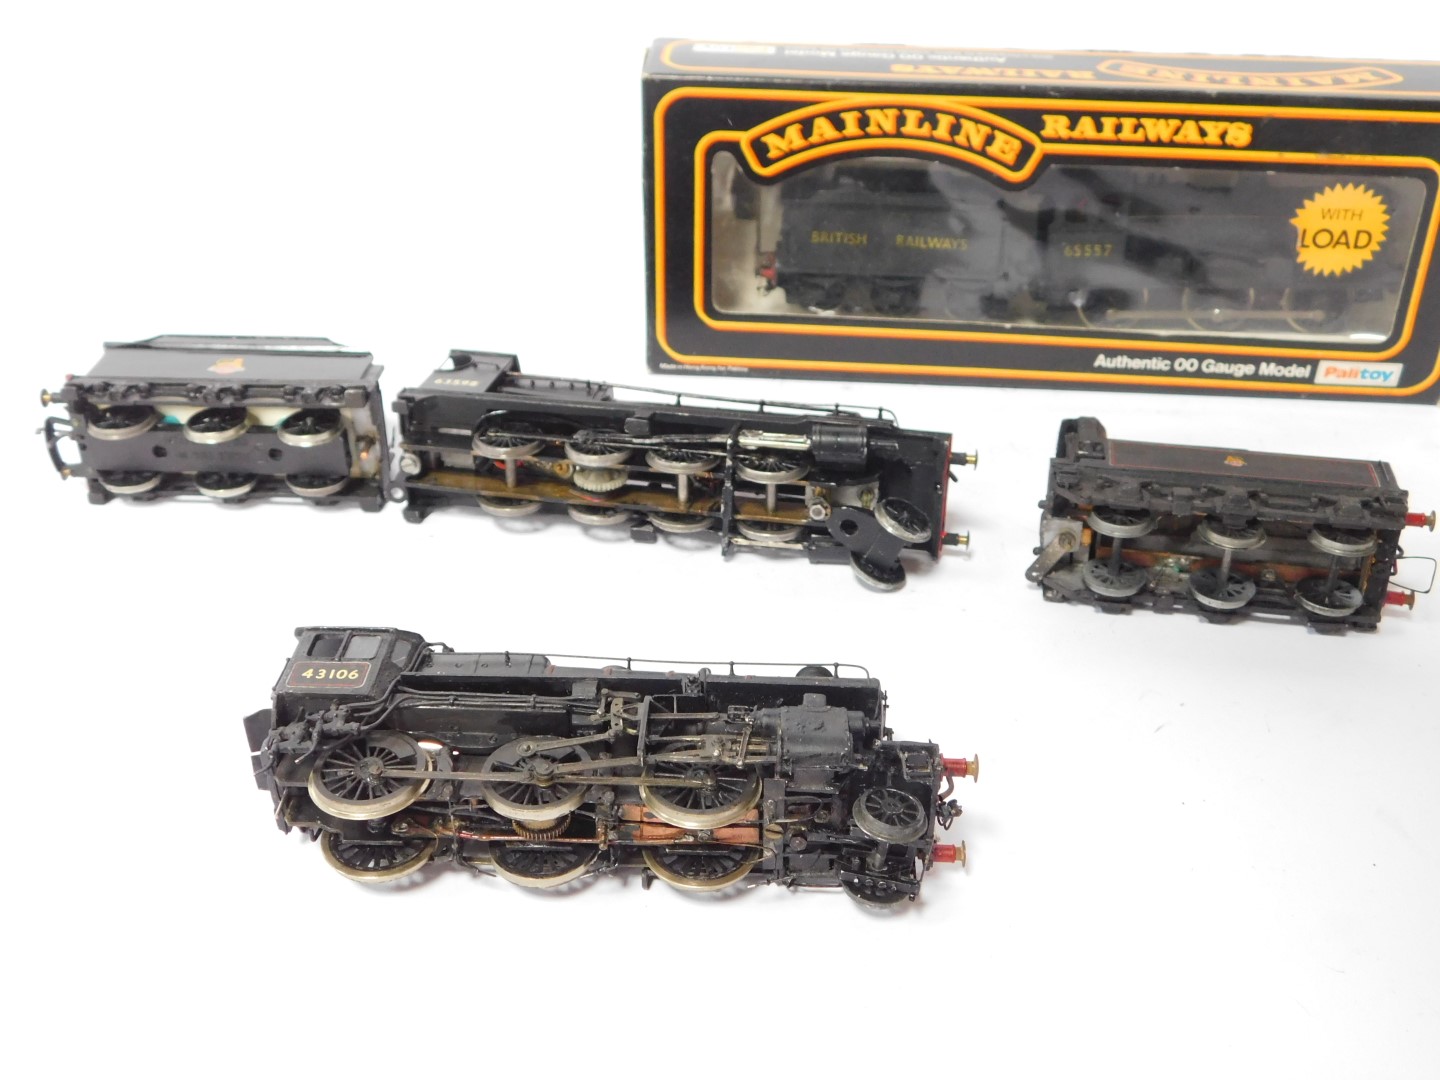 Three kit built OO gauge locomotives, British Rail black livery, comprising 63598, 43106 and 65557. - Image 2 of 2